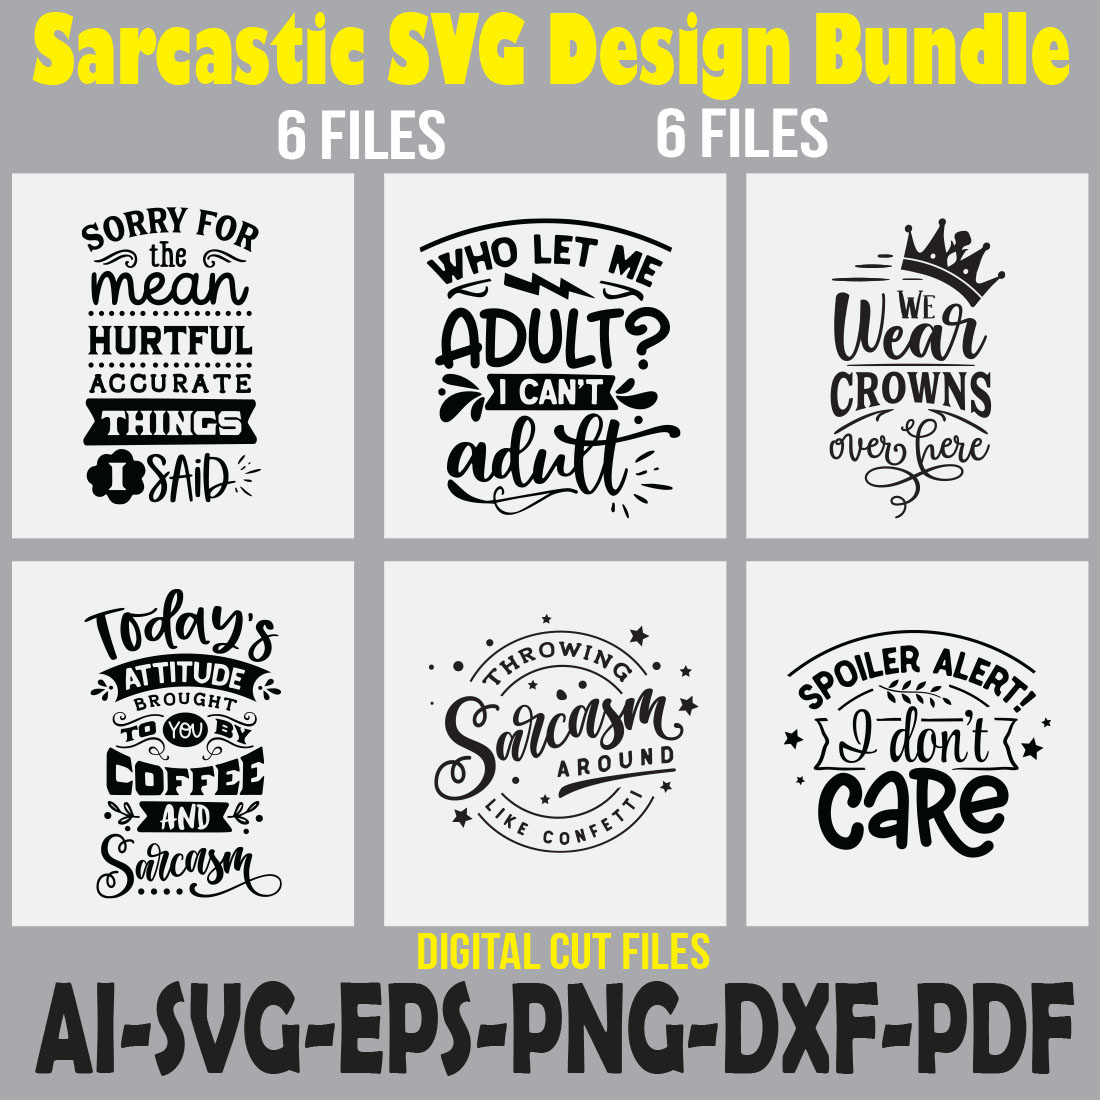 Sarcastic SVG Design Bundle cover image.